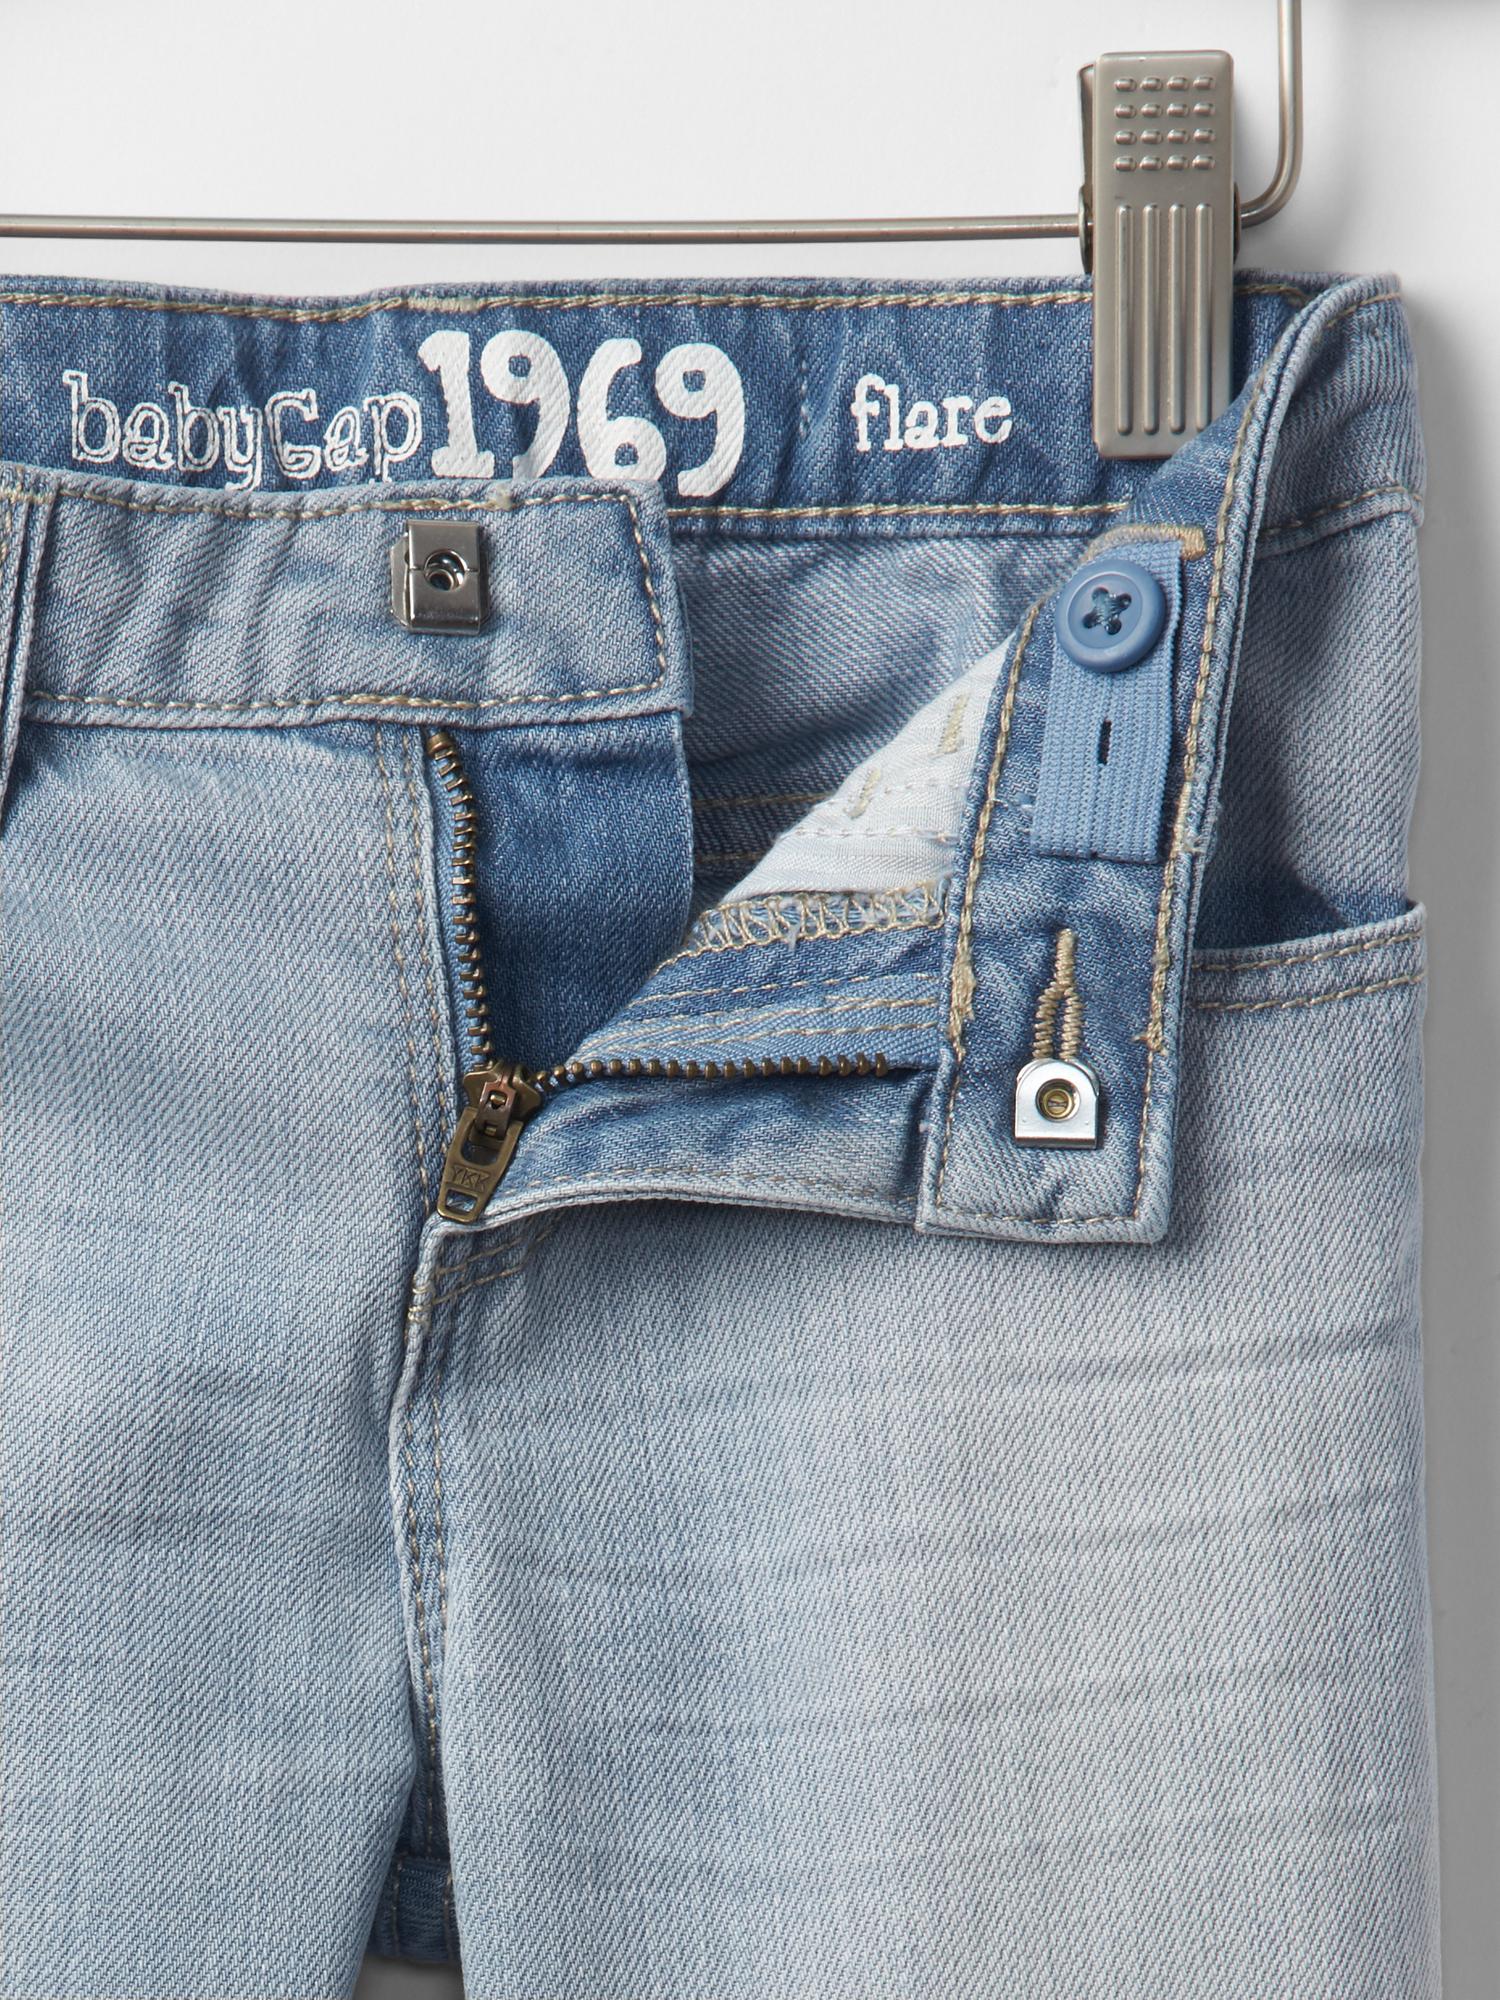 Gap 1969 Light Authentic Flare Jeans, $69, Gap